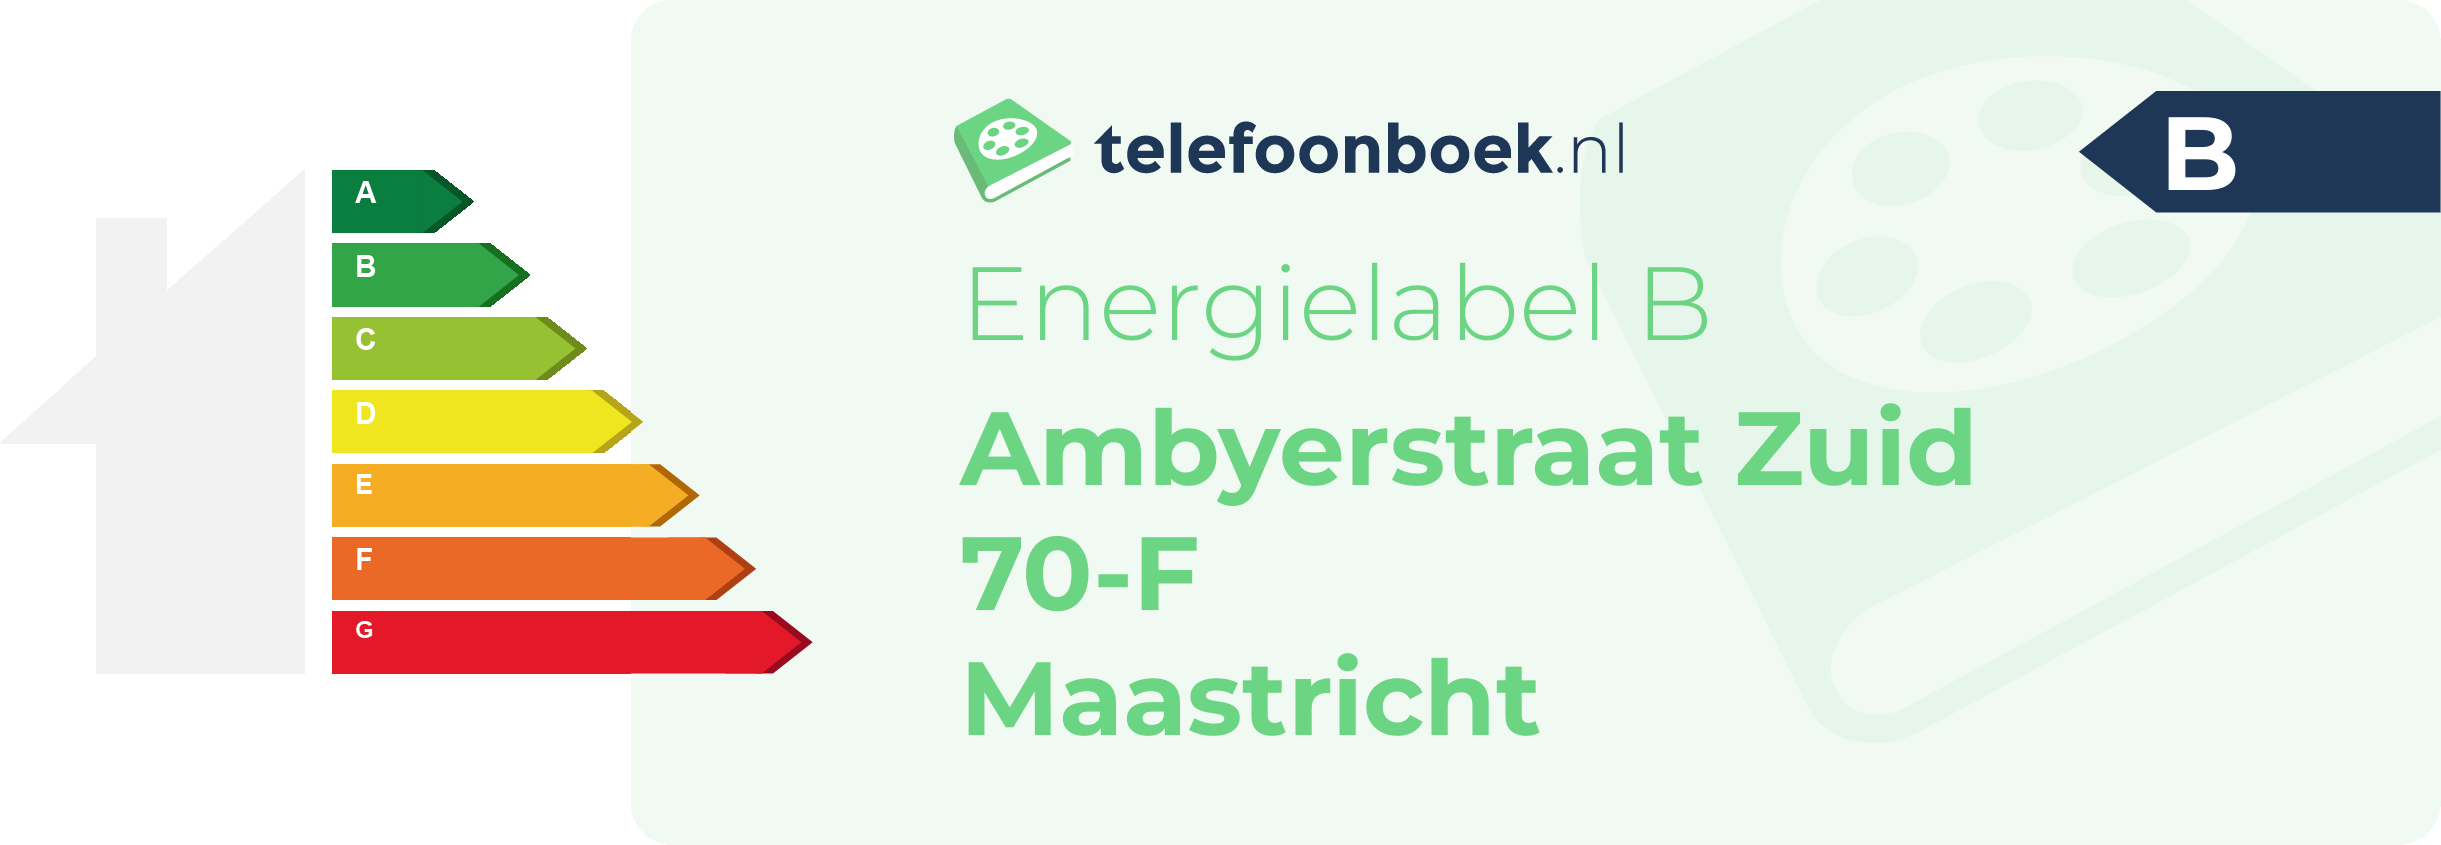 Energielabel Ambyerstraat Zuid 70-F Maastricht